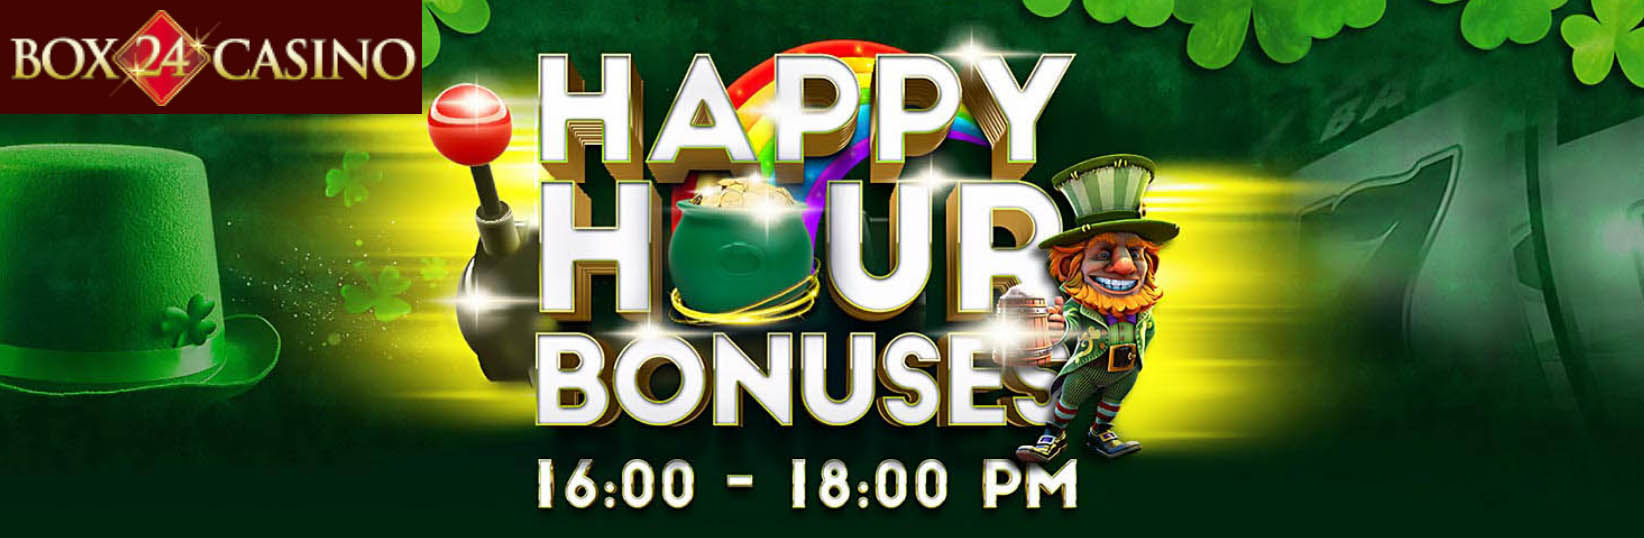 Bag a Happy Hour Bonus this St. Paddy's Day at Box 24 Casino